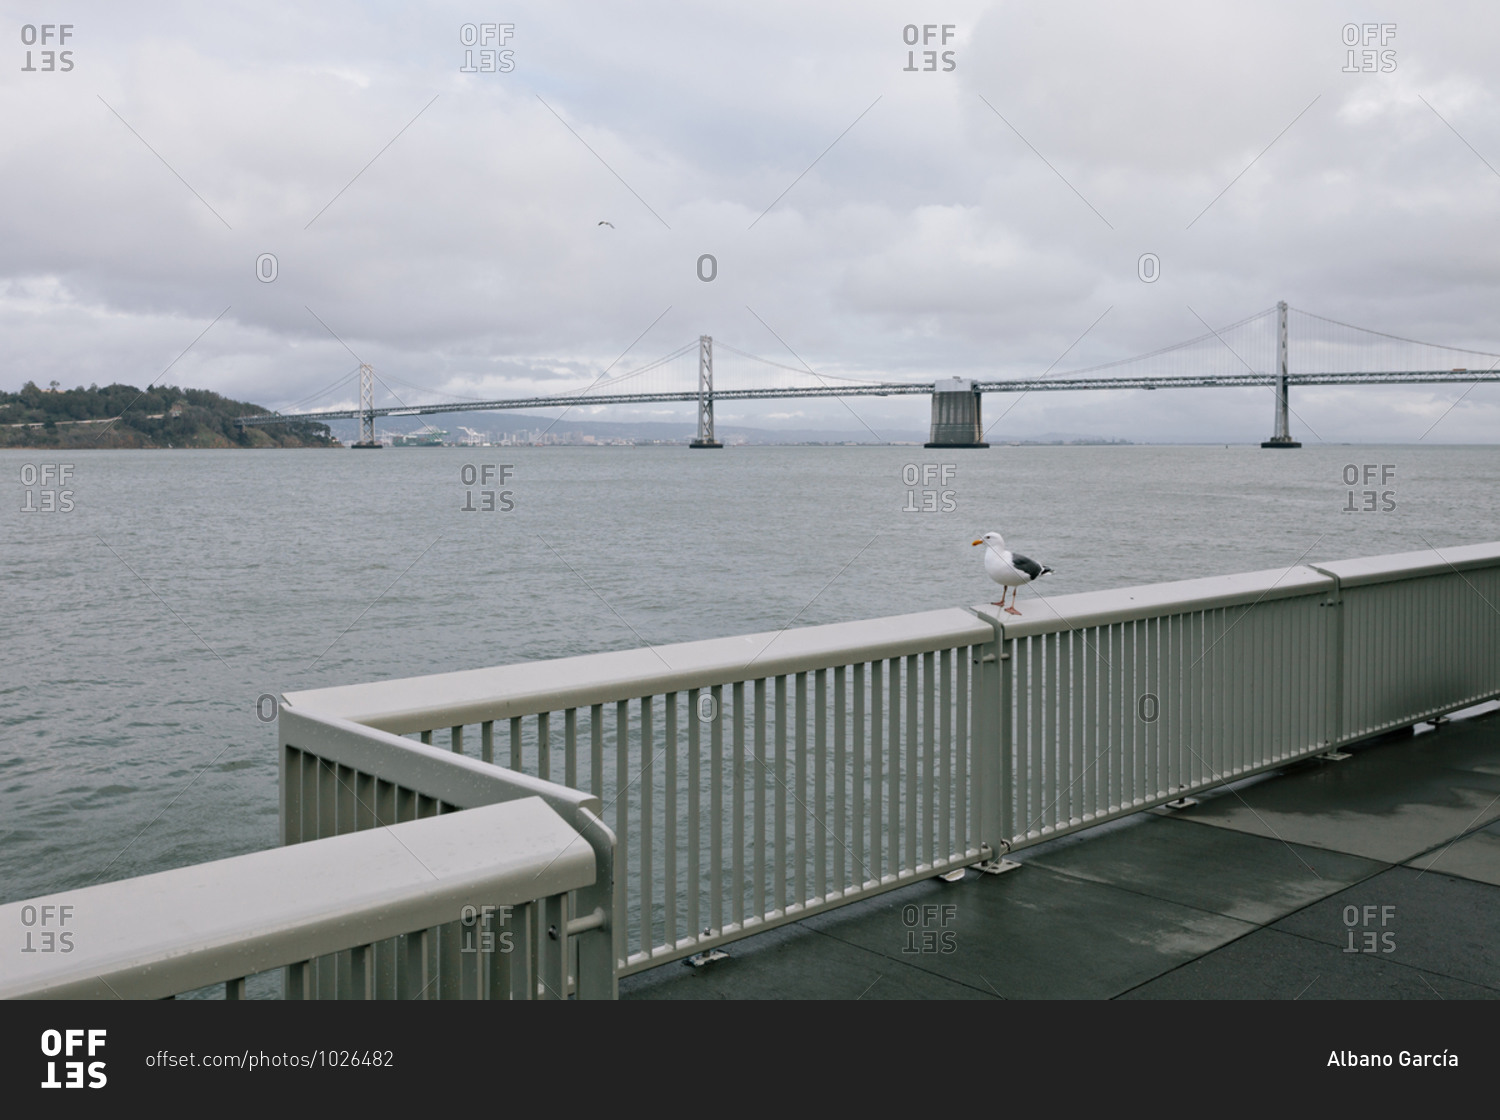 View of the San FranciscoñOakland Bay Bridge in California